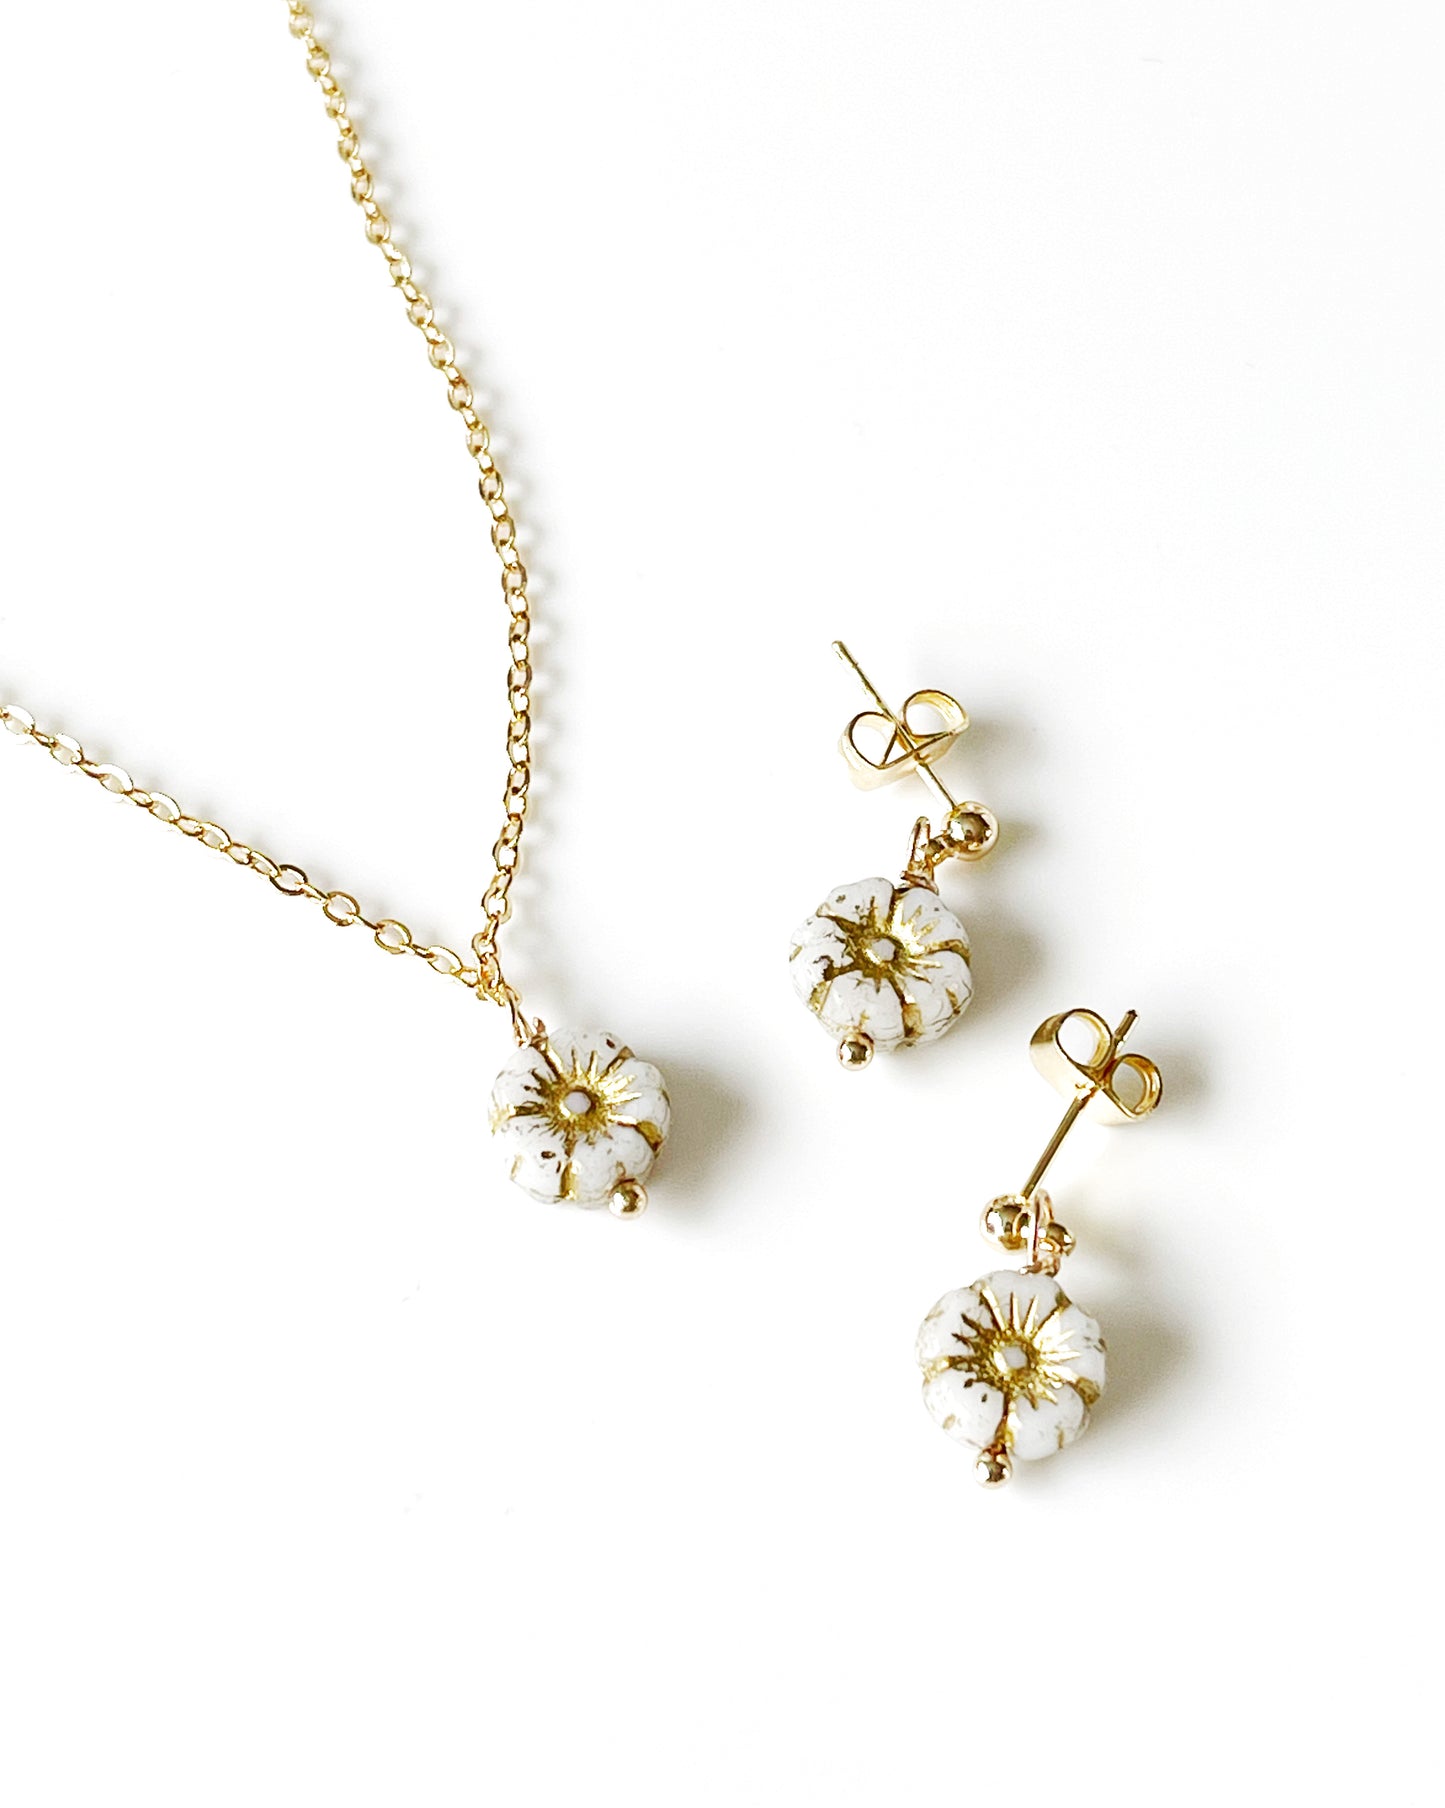 Mini sakura necklace and earrings set in antique white